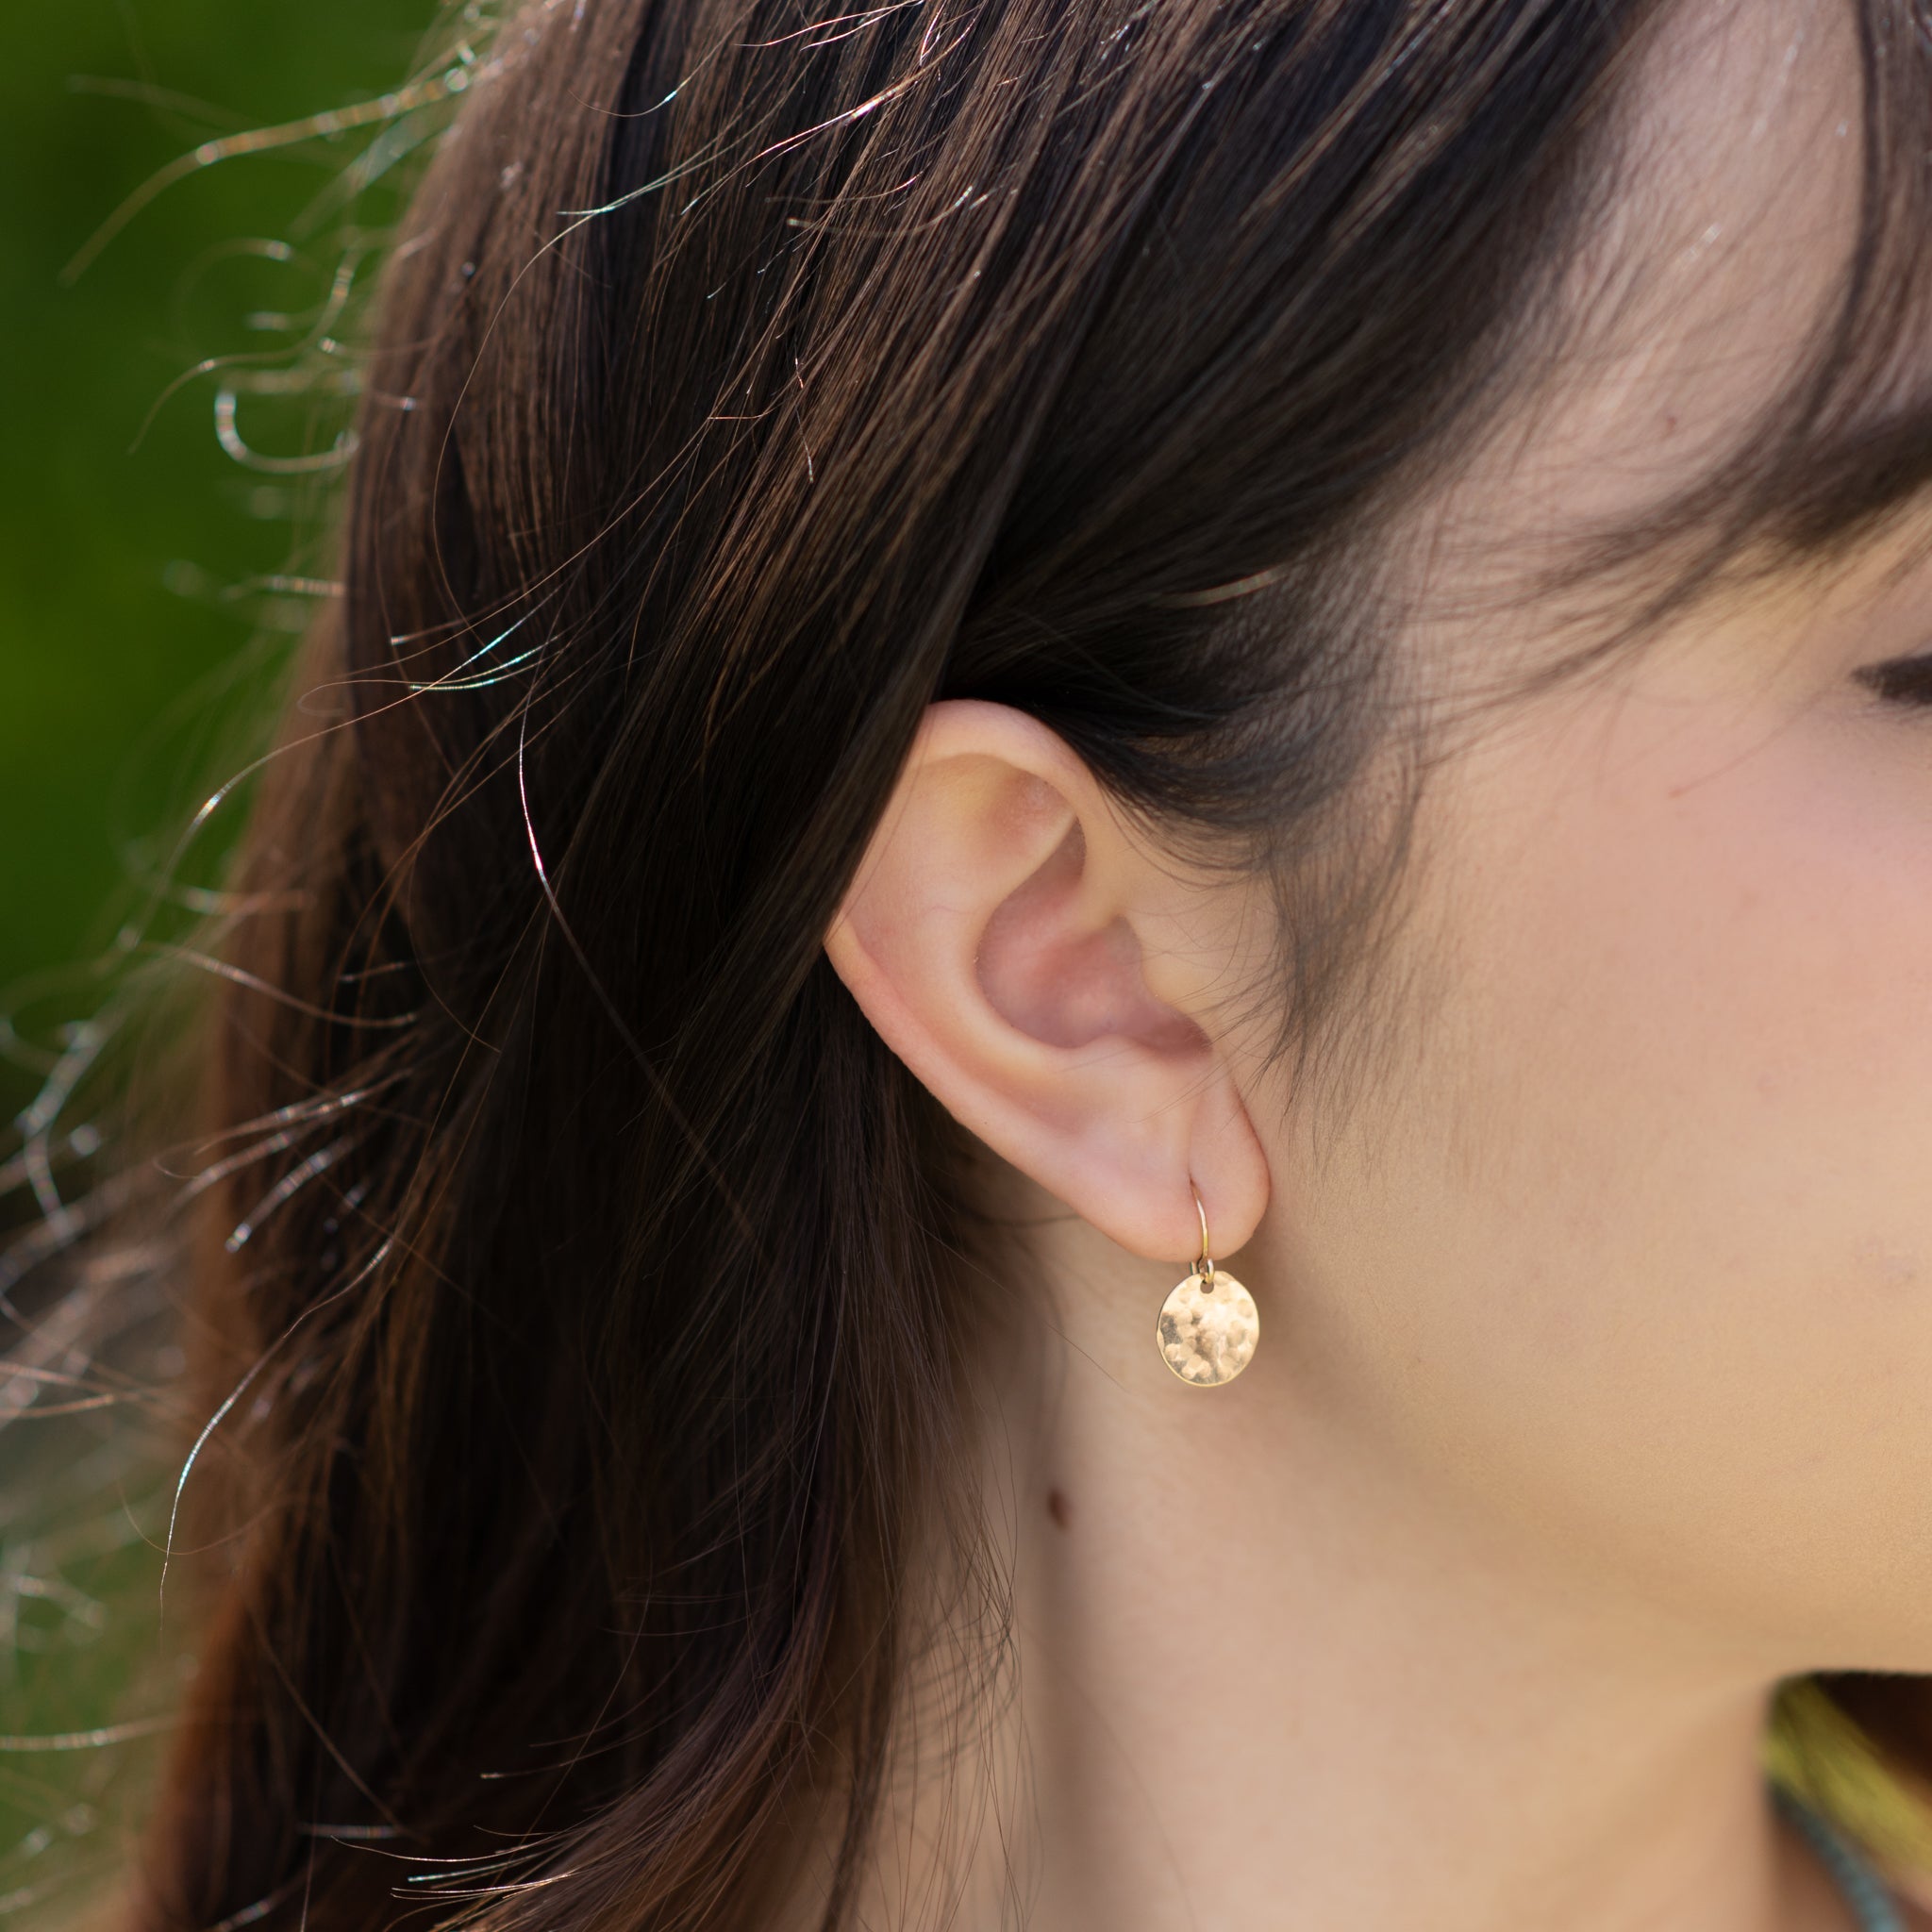 14k Gold Filled Disc Earrings - Jewel Ya